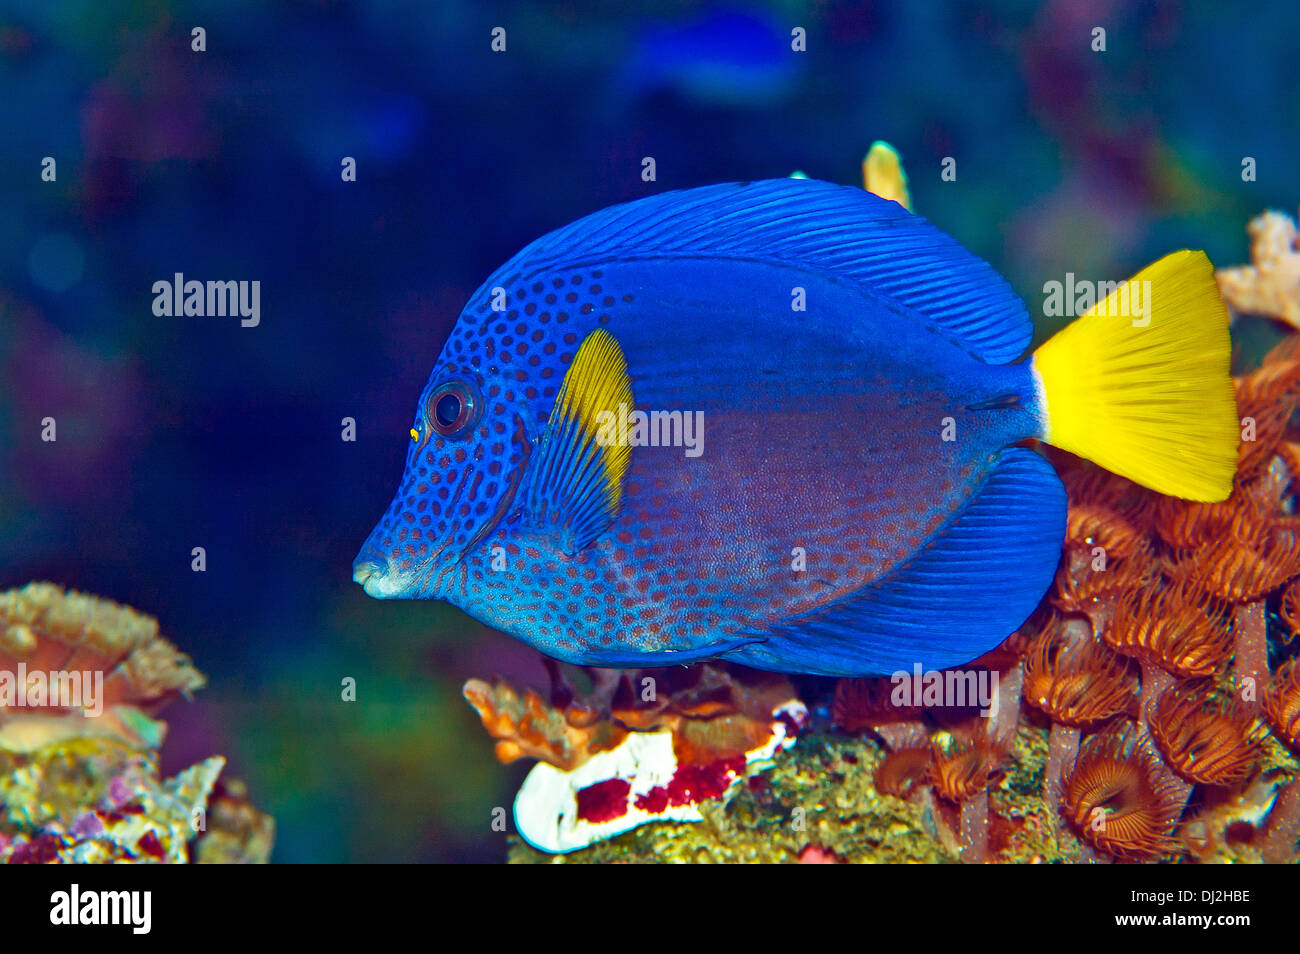 REGAL BLUE TANG - Pesce tropicale in una barriera corallina Foto Stock